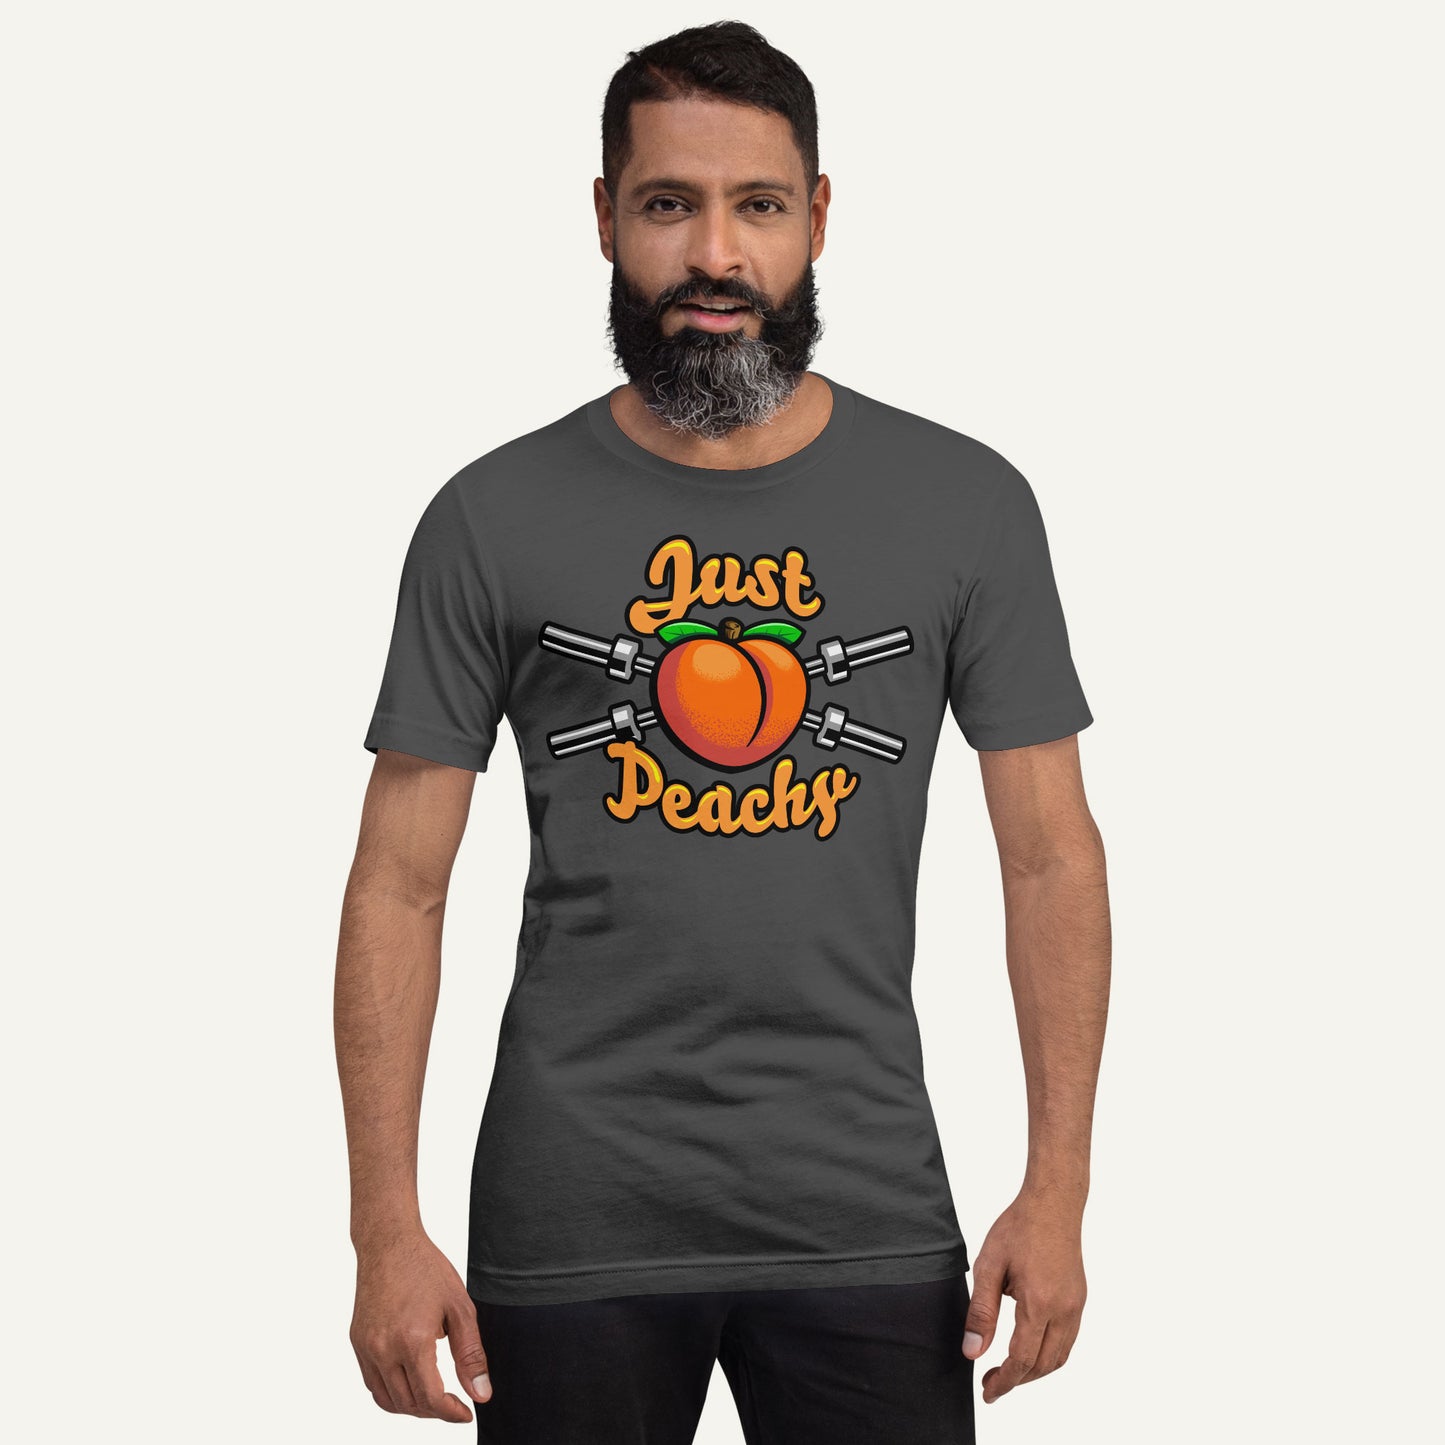 Just Peachy Men's Standard T-Shirt